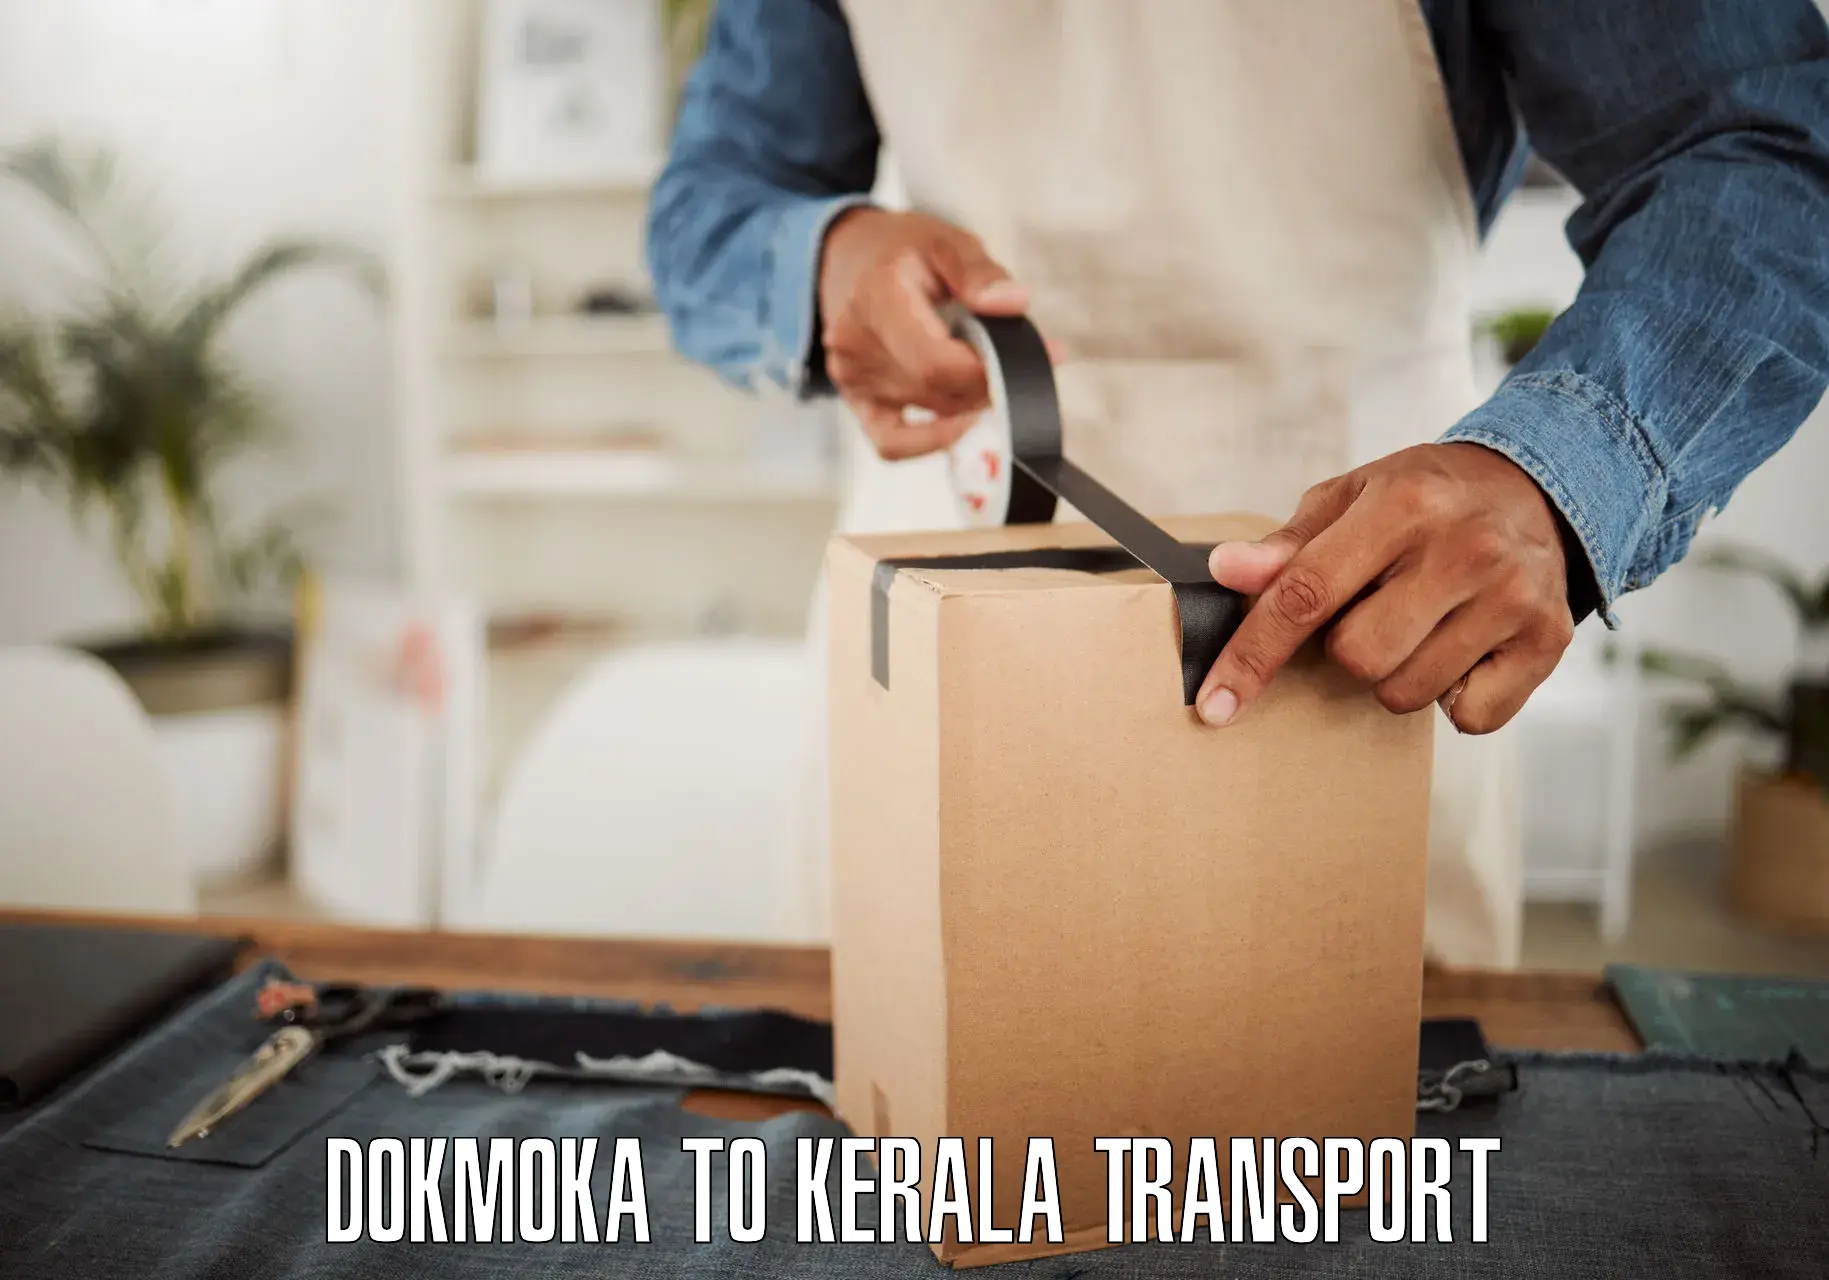 Transport in sharing Dokmoka to Manthuka